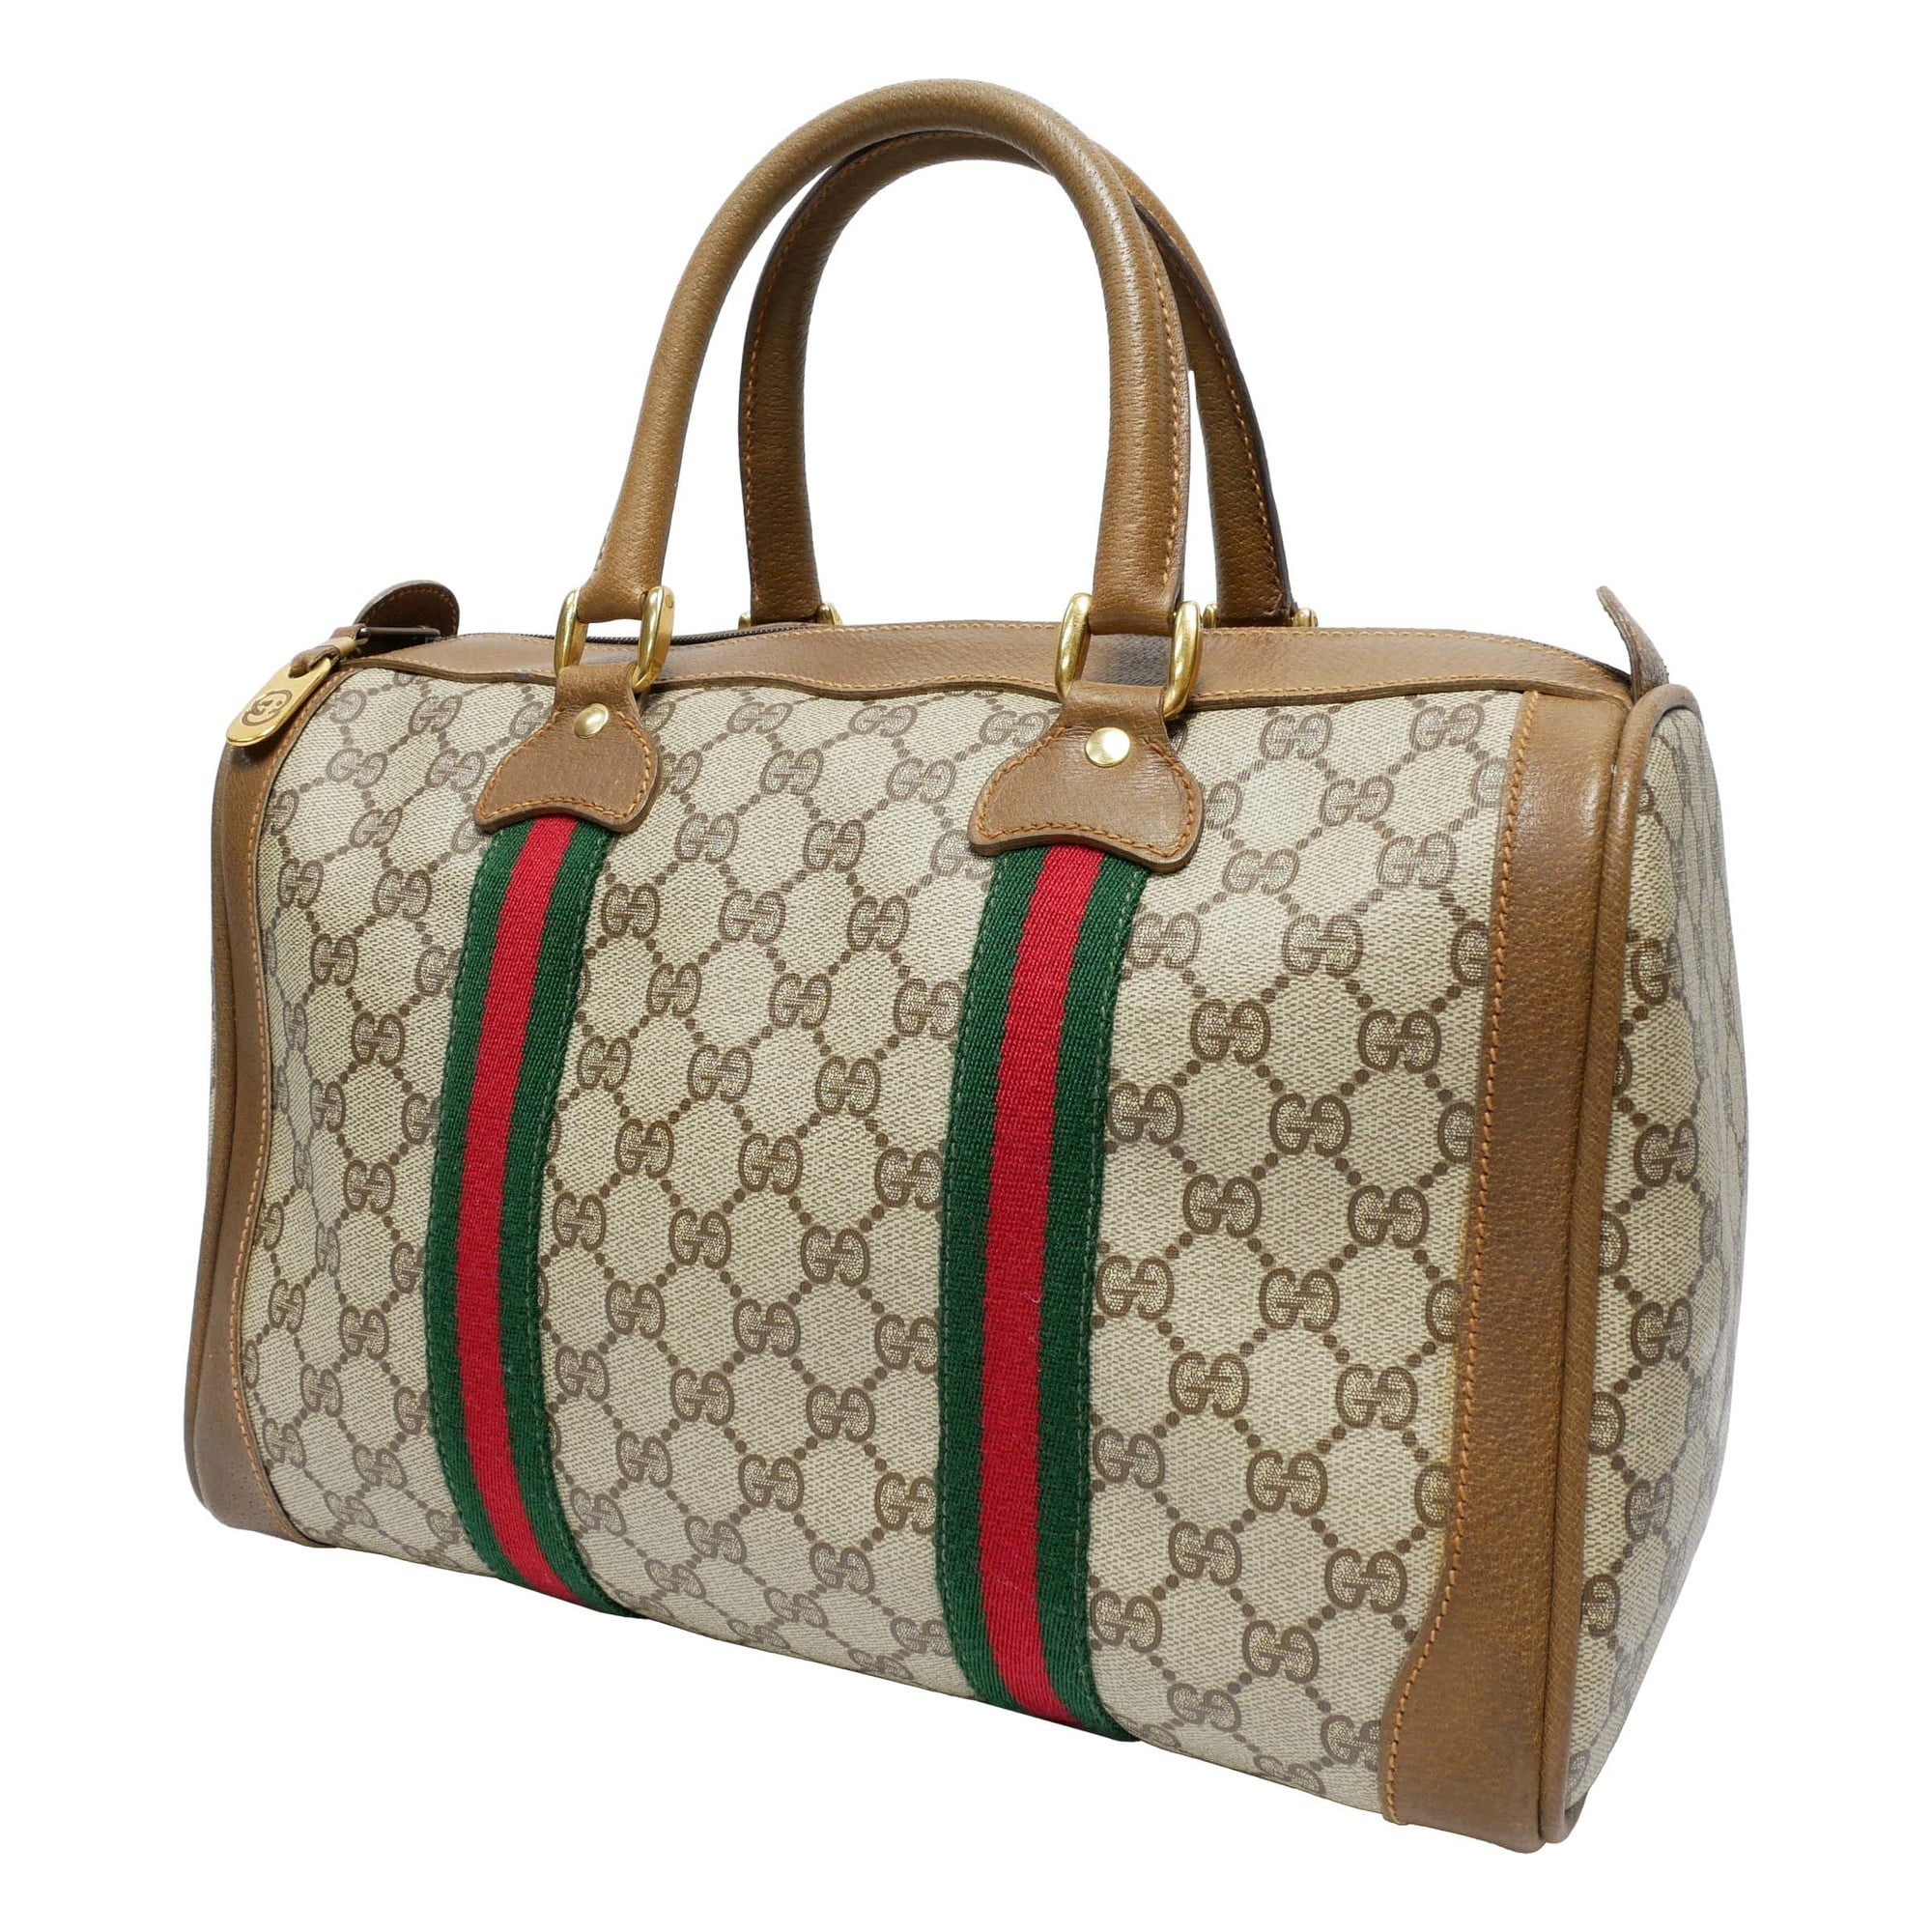 VIntage Gucci bag | Mysite 1